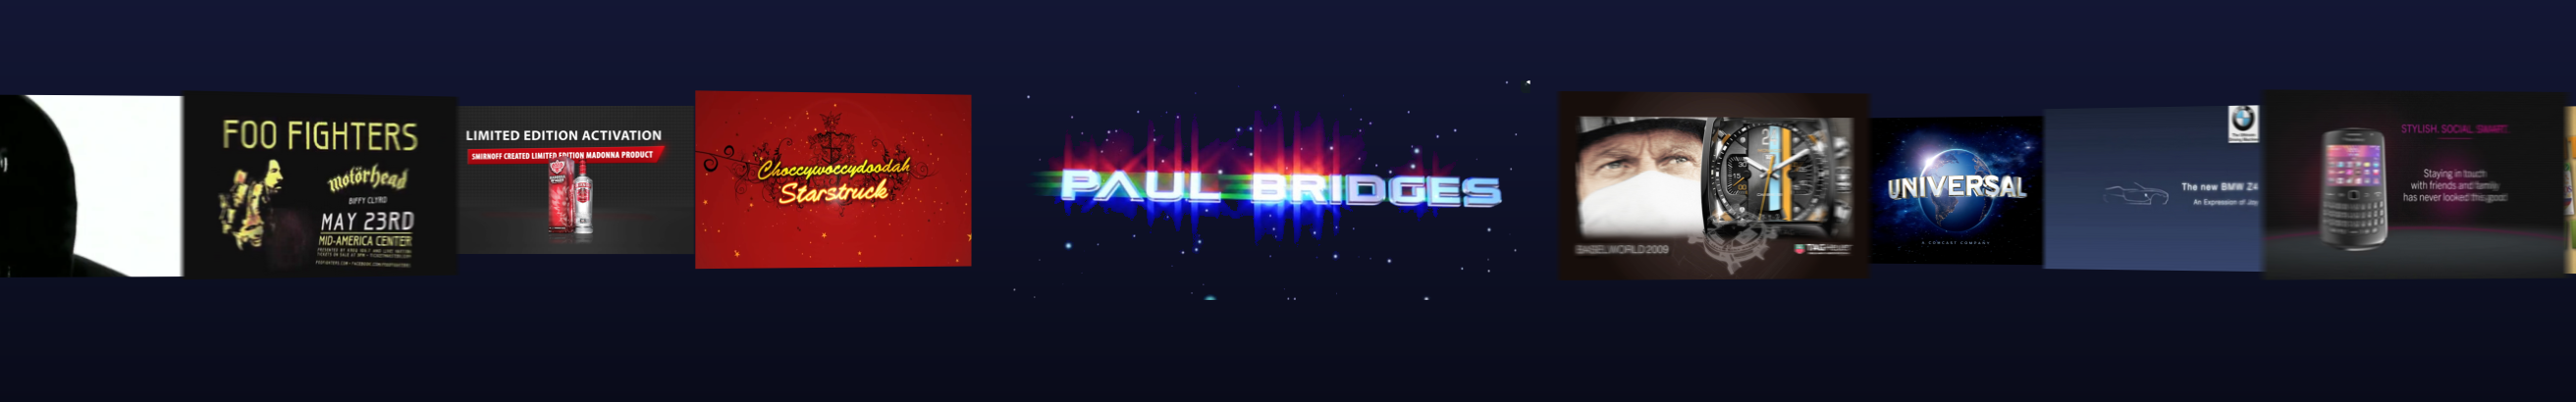 Baner profilu użytkownika Paul Bridges